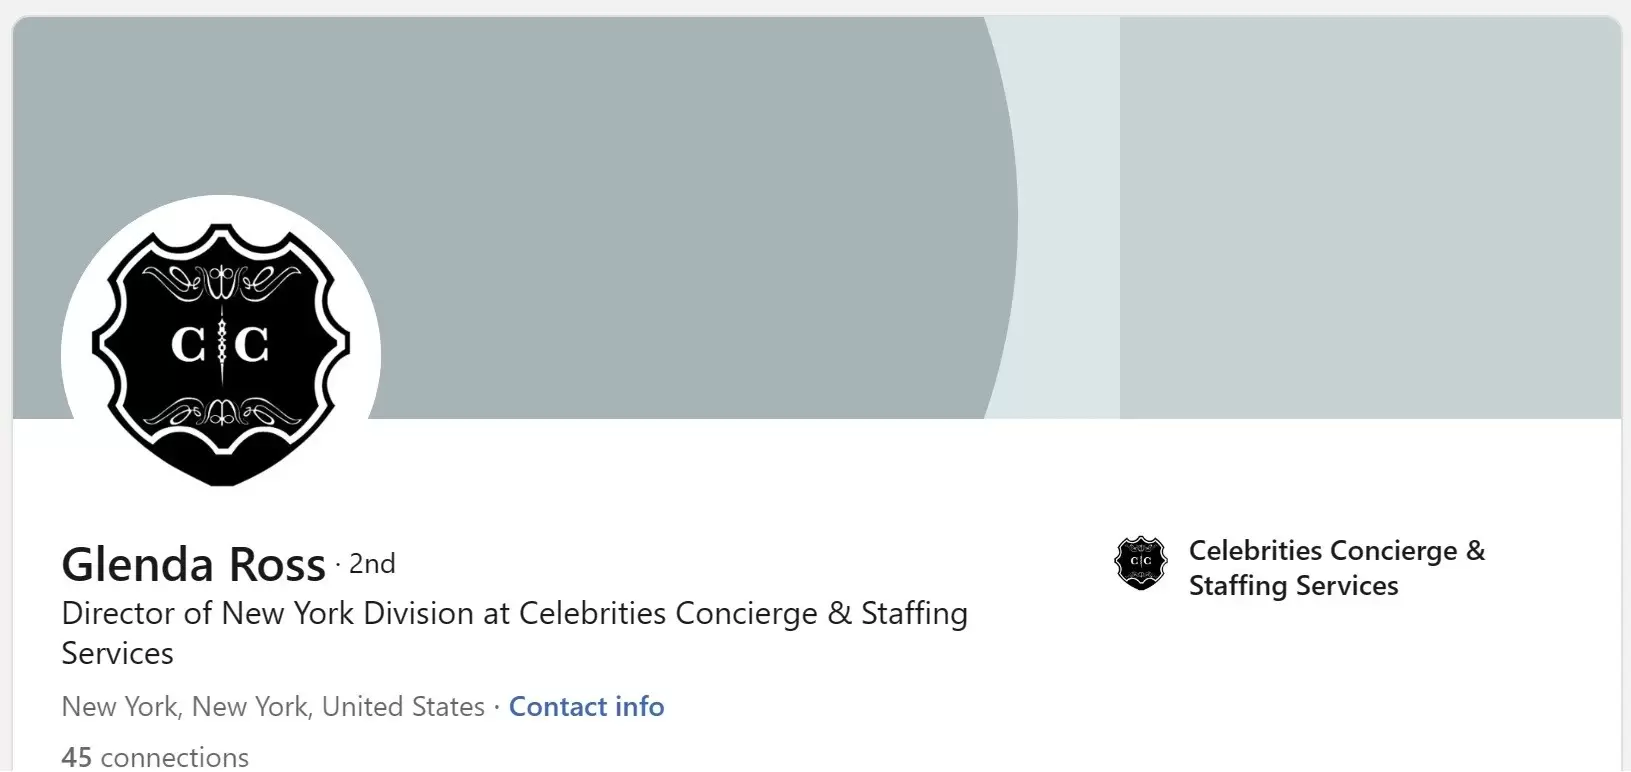 Celebrities Concierge & Staffing Services on LinkedIn